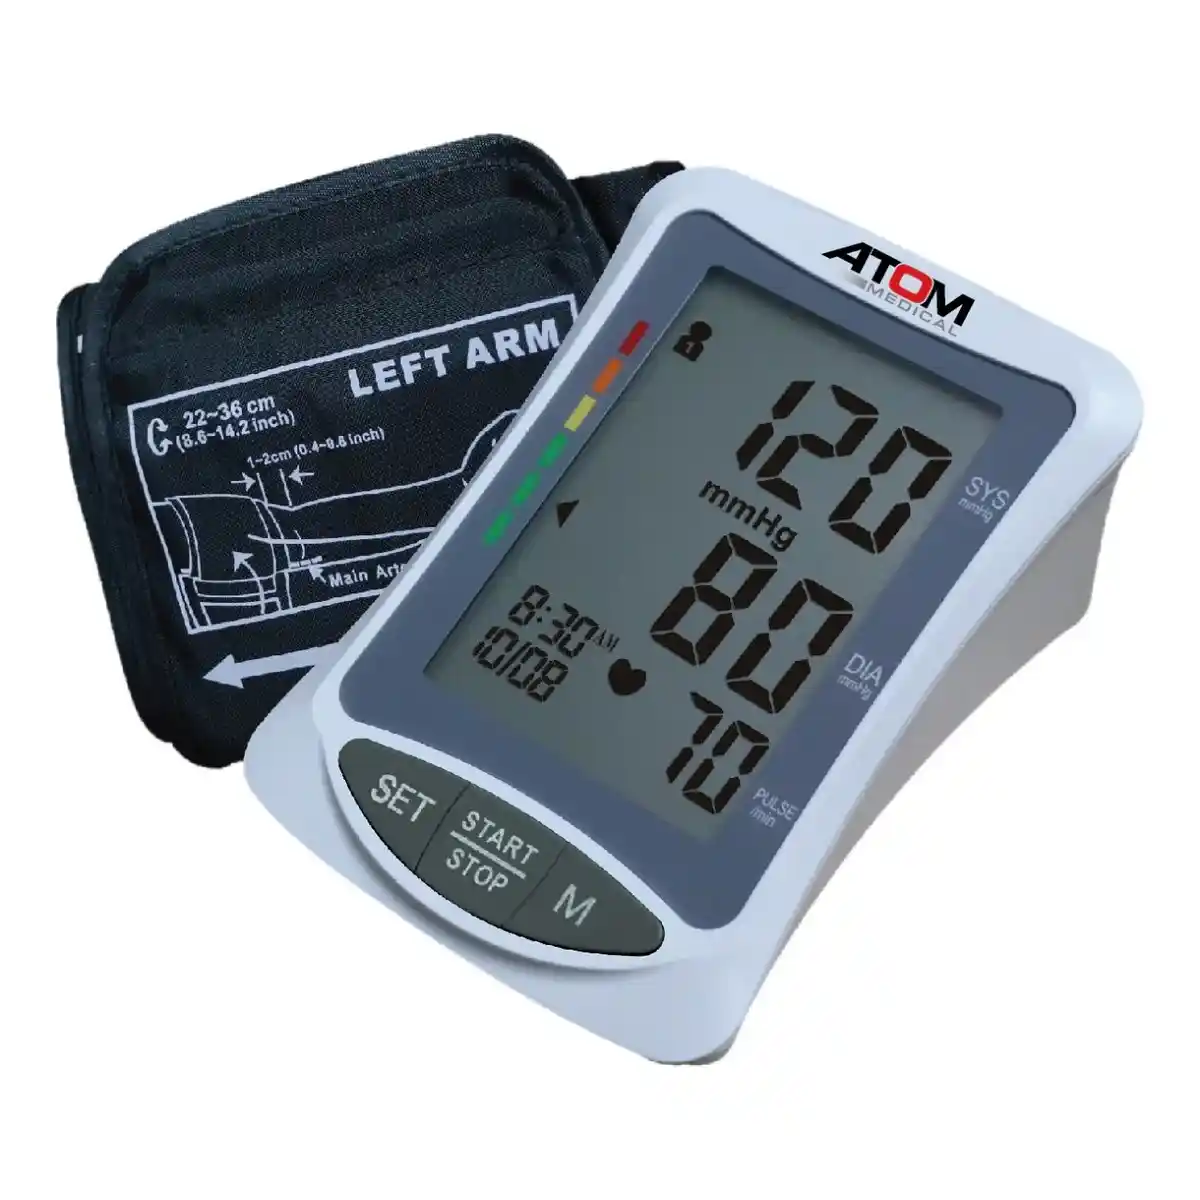 Atom 904 Arm Type Blood Pressure Monitor